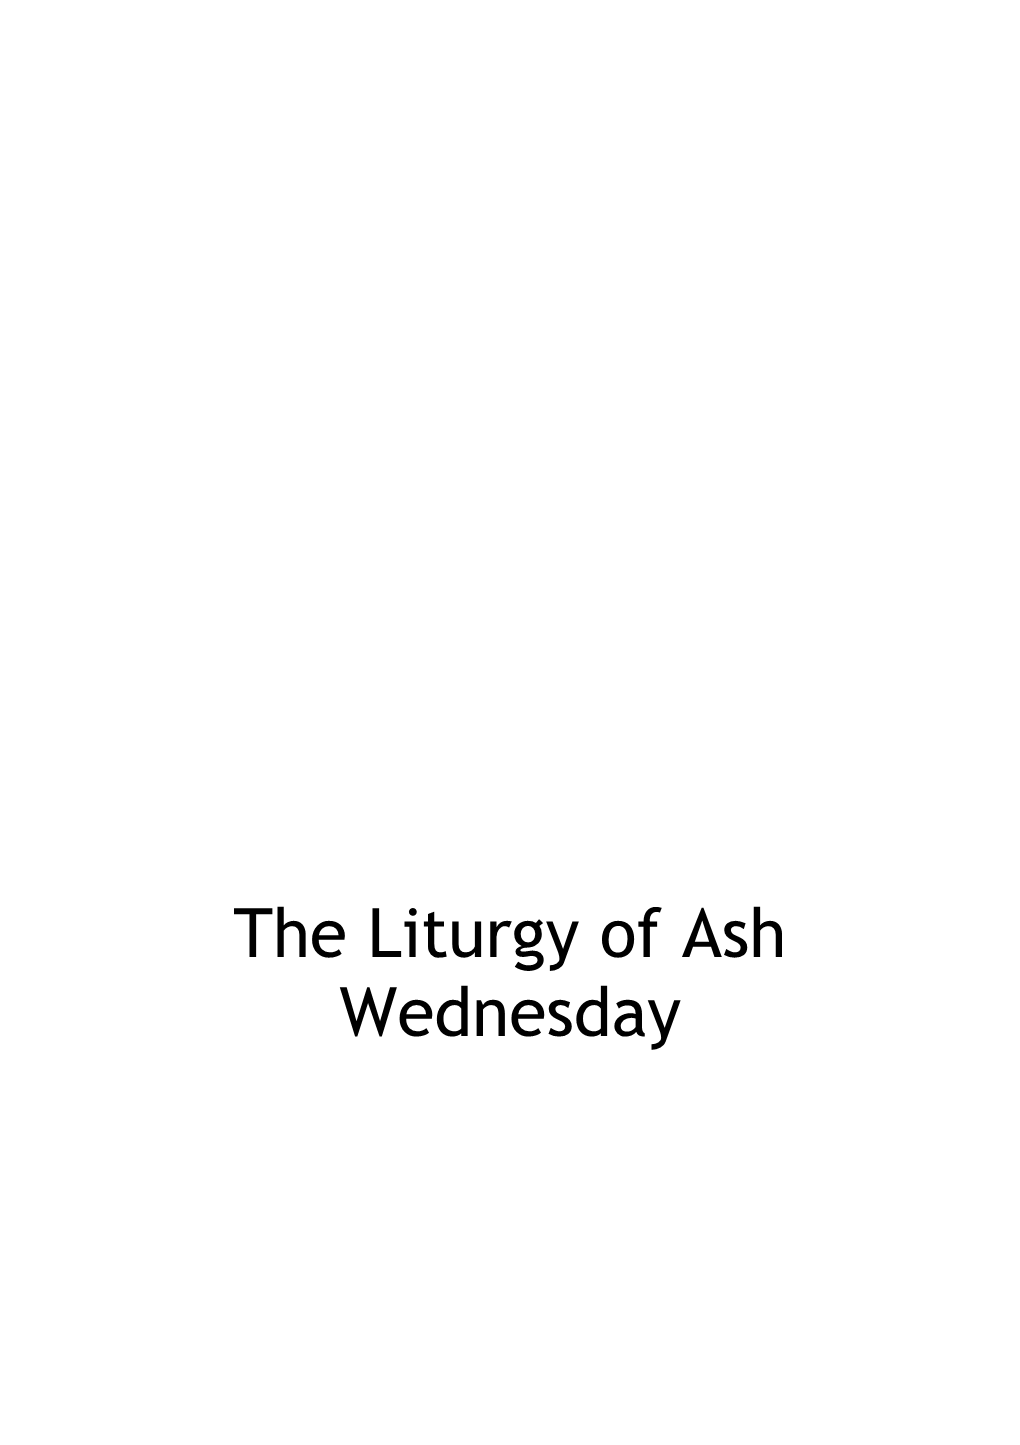 The Liturgy of Ash Wednesday